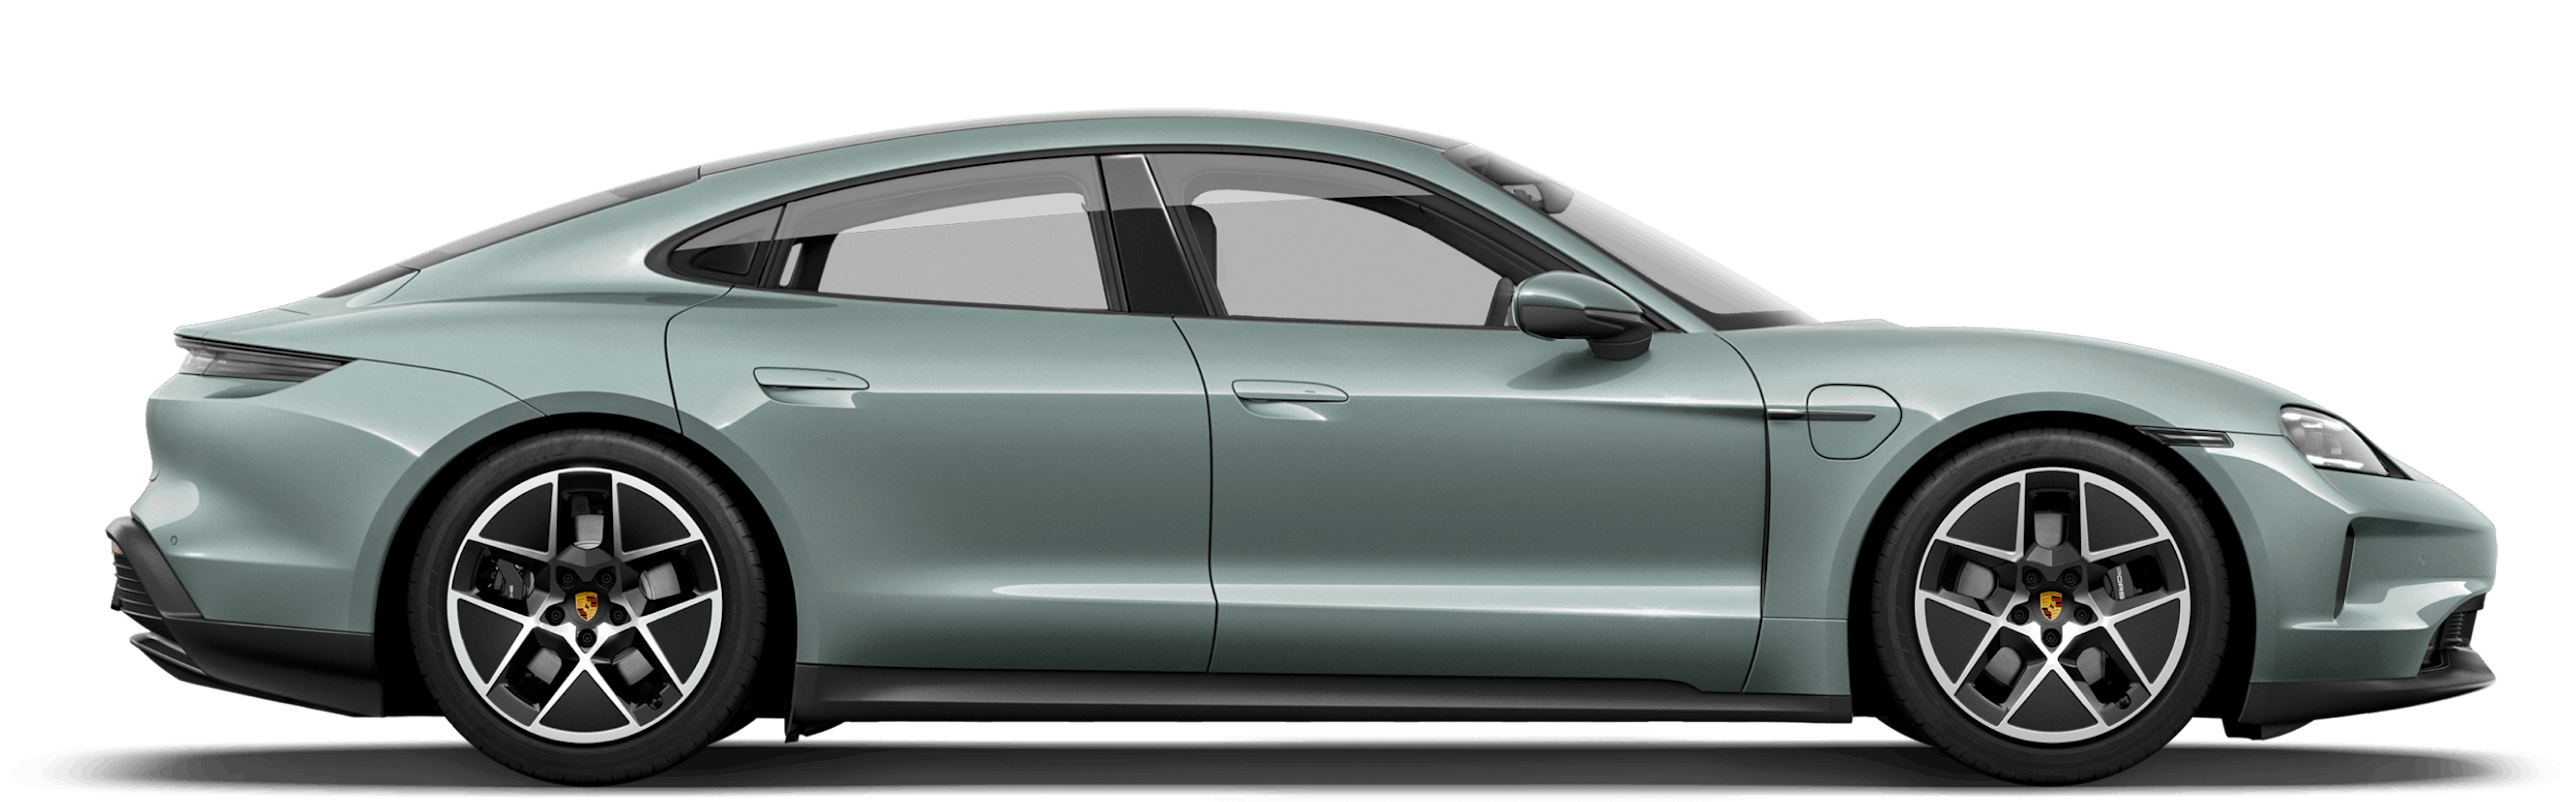 Porsche Taycan Cross Turismo Review: My Electric Dream Car